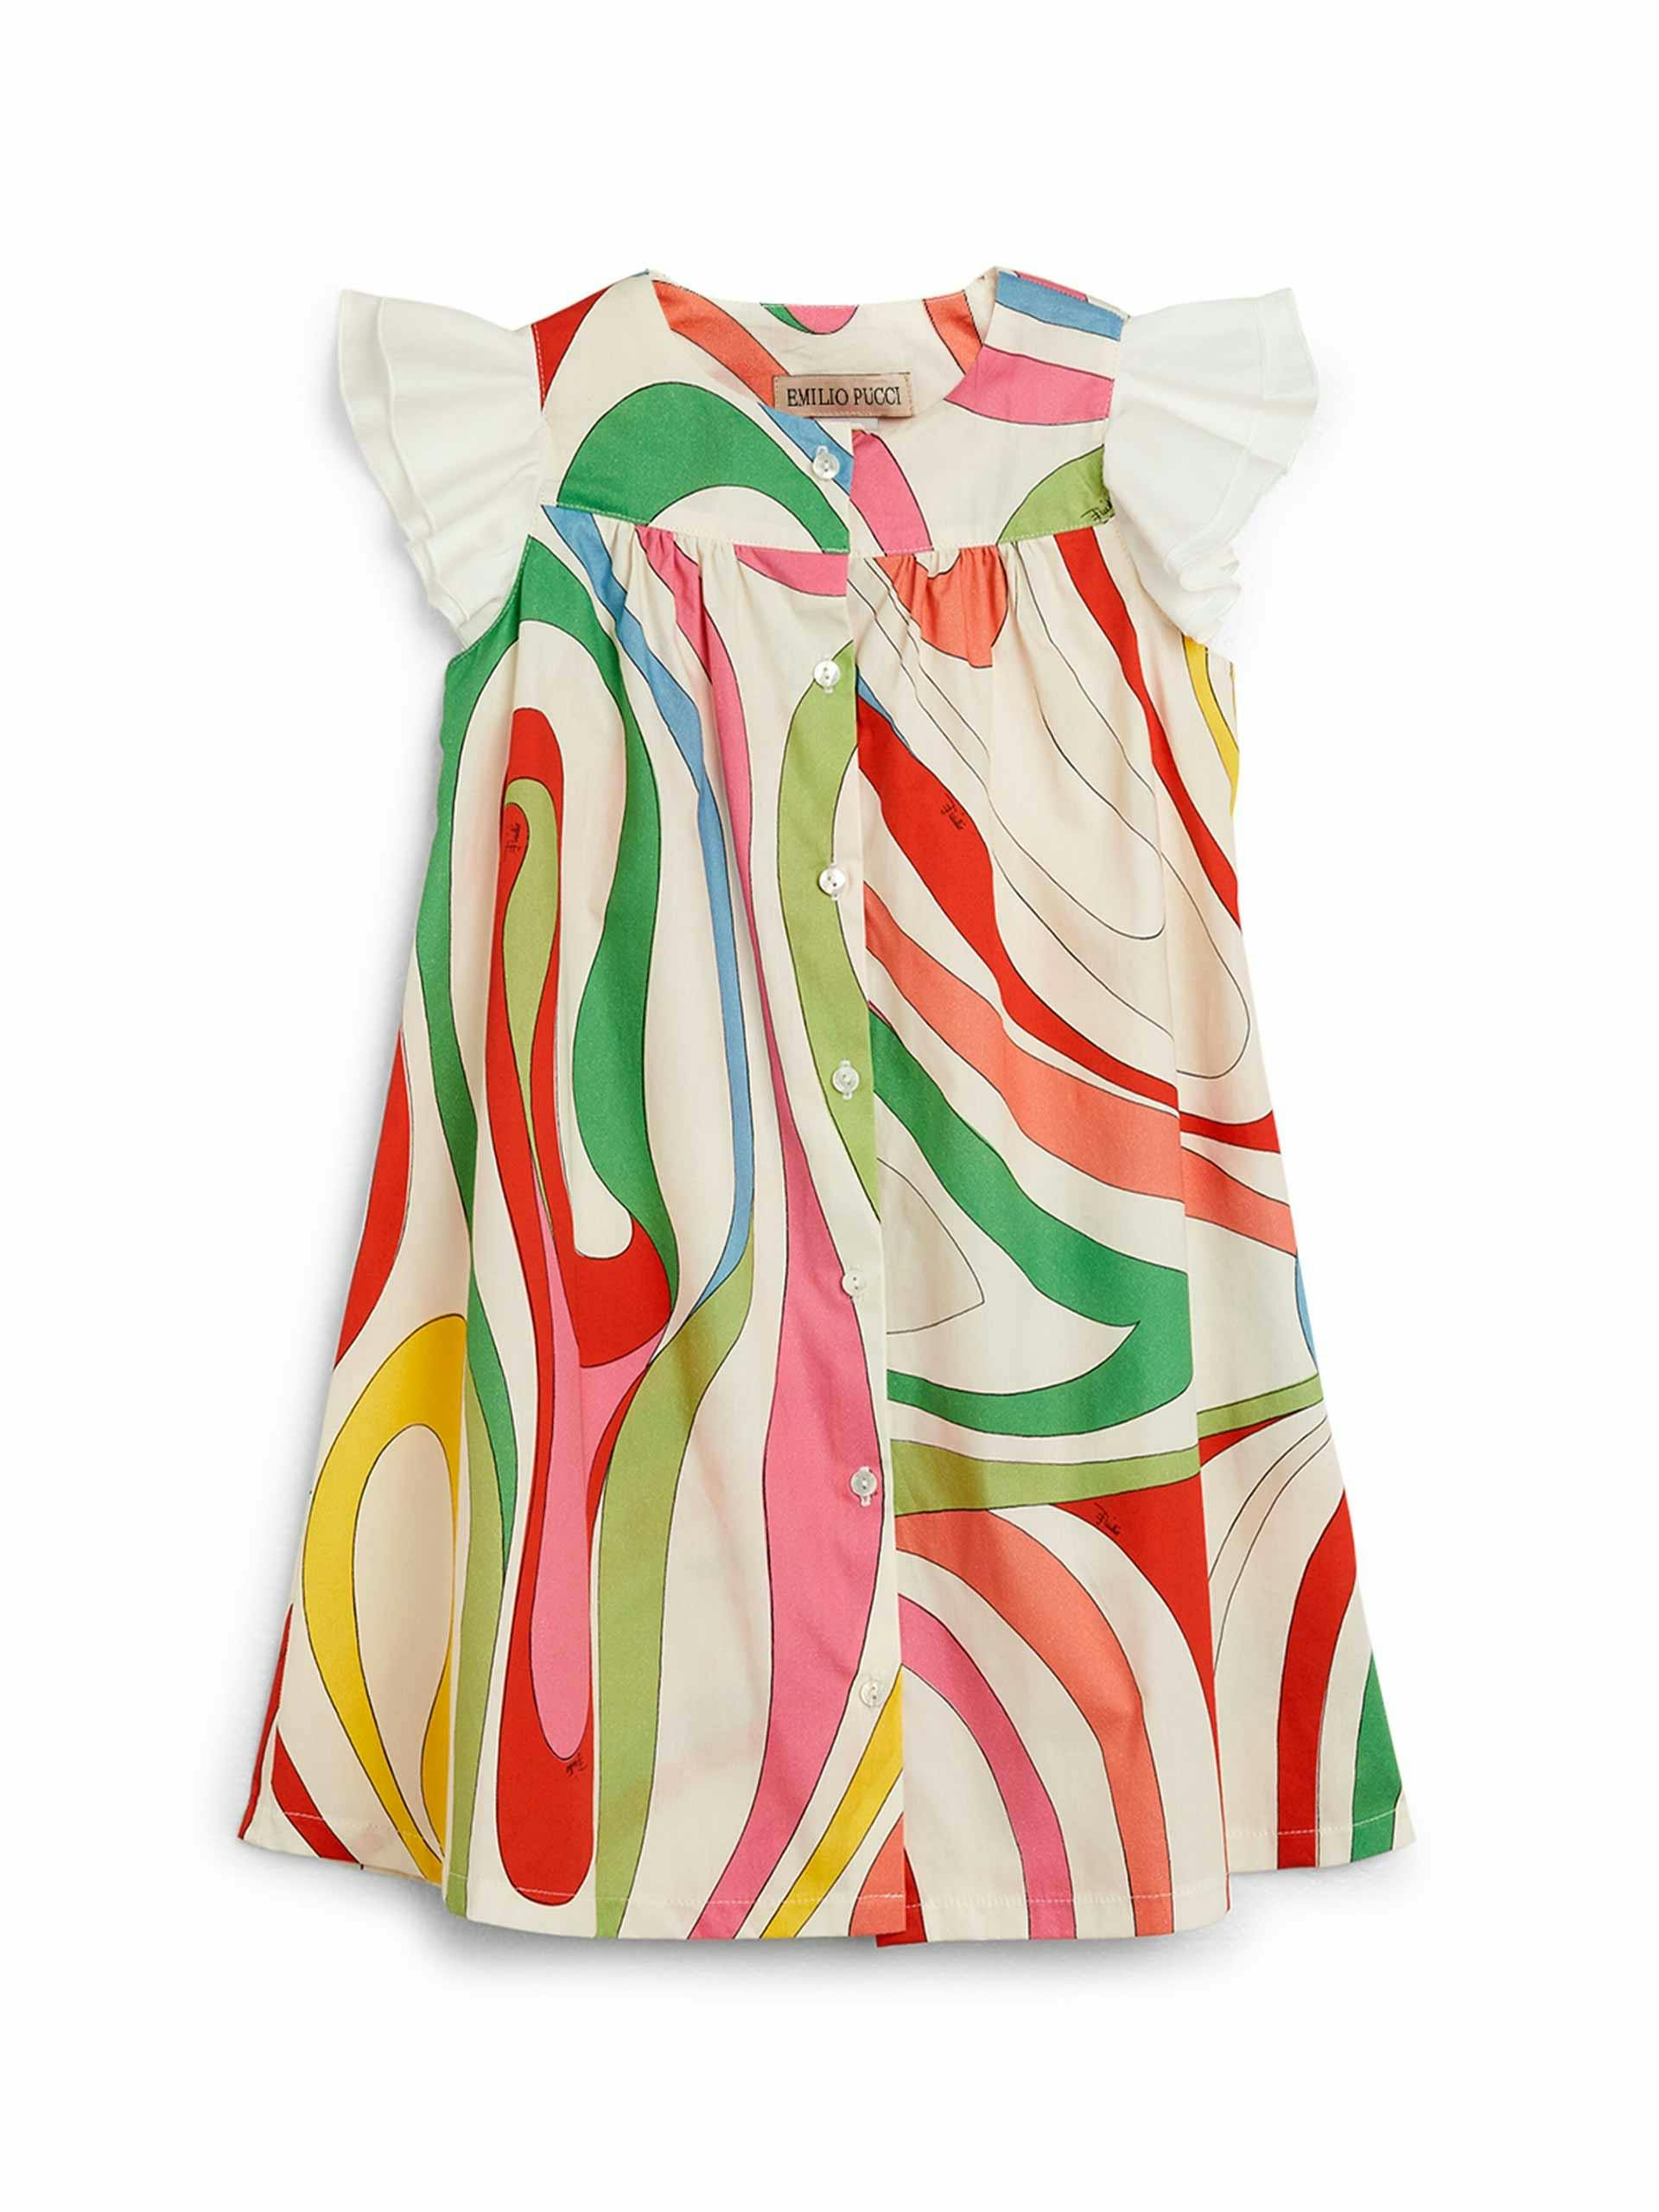 Multi-coloured graphic printed dress